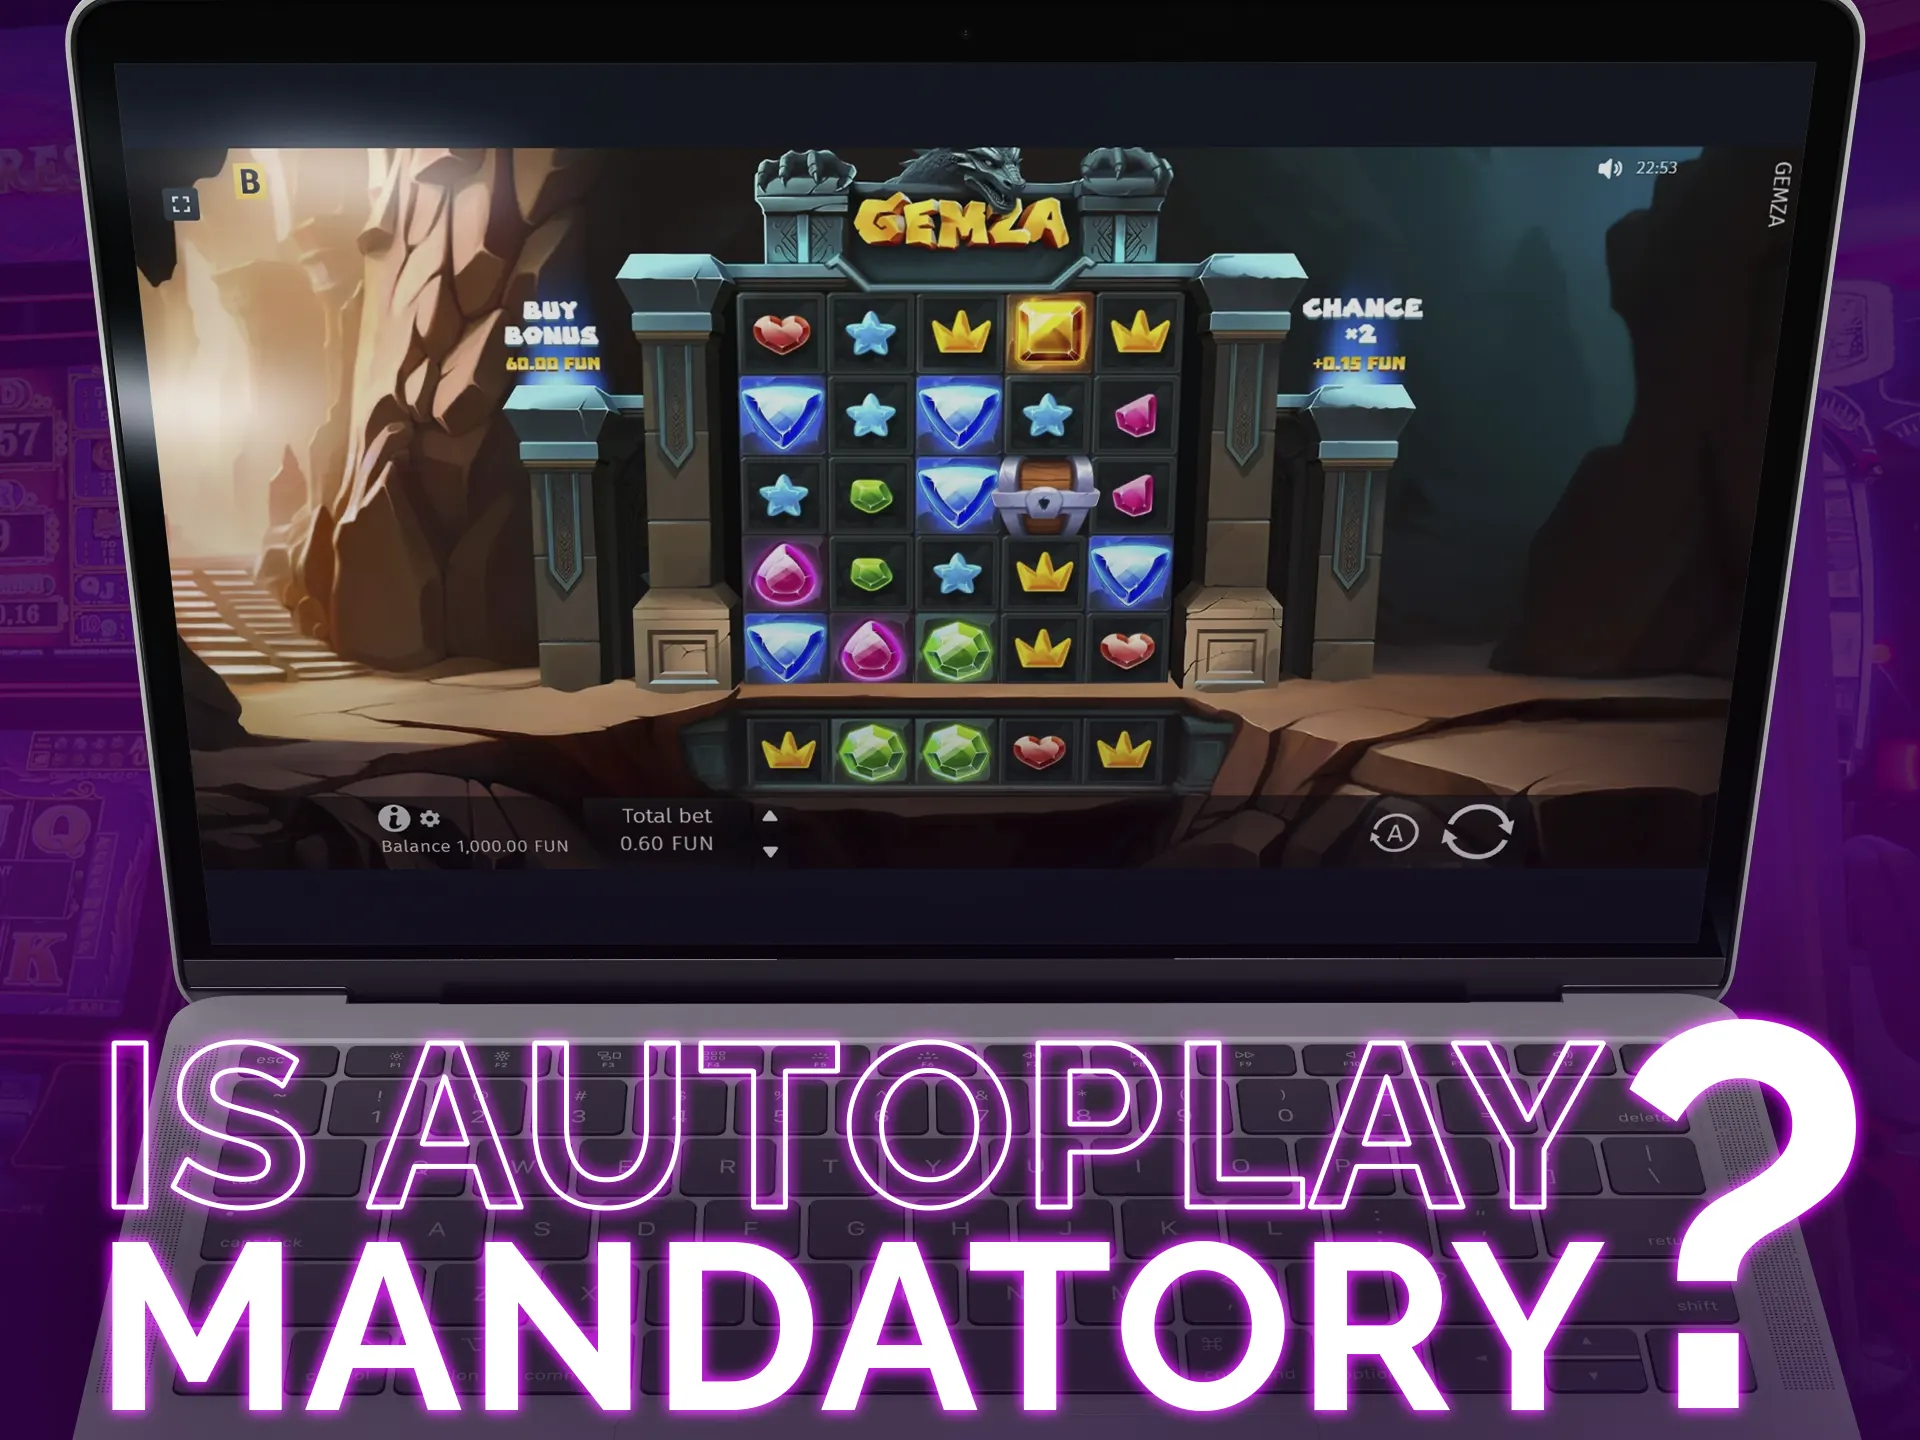 Autoplay is optional, not mandatory.